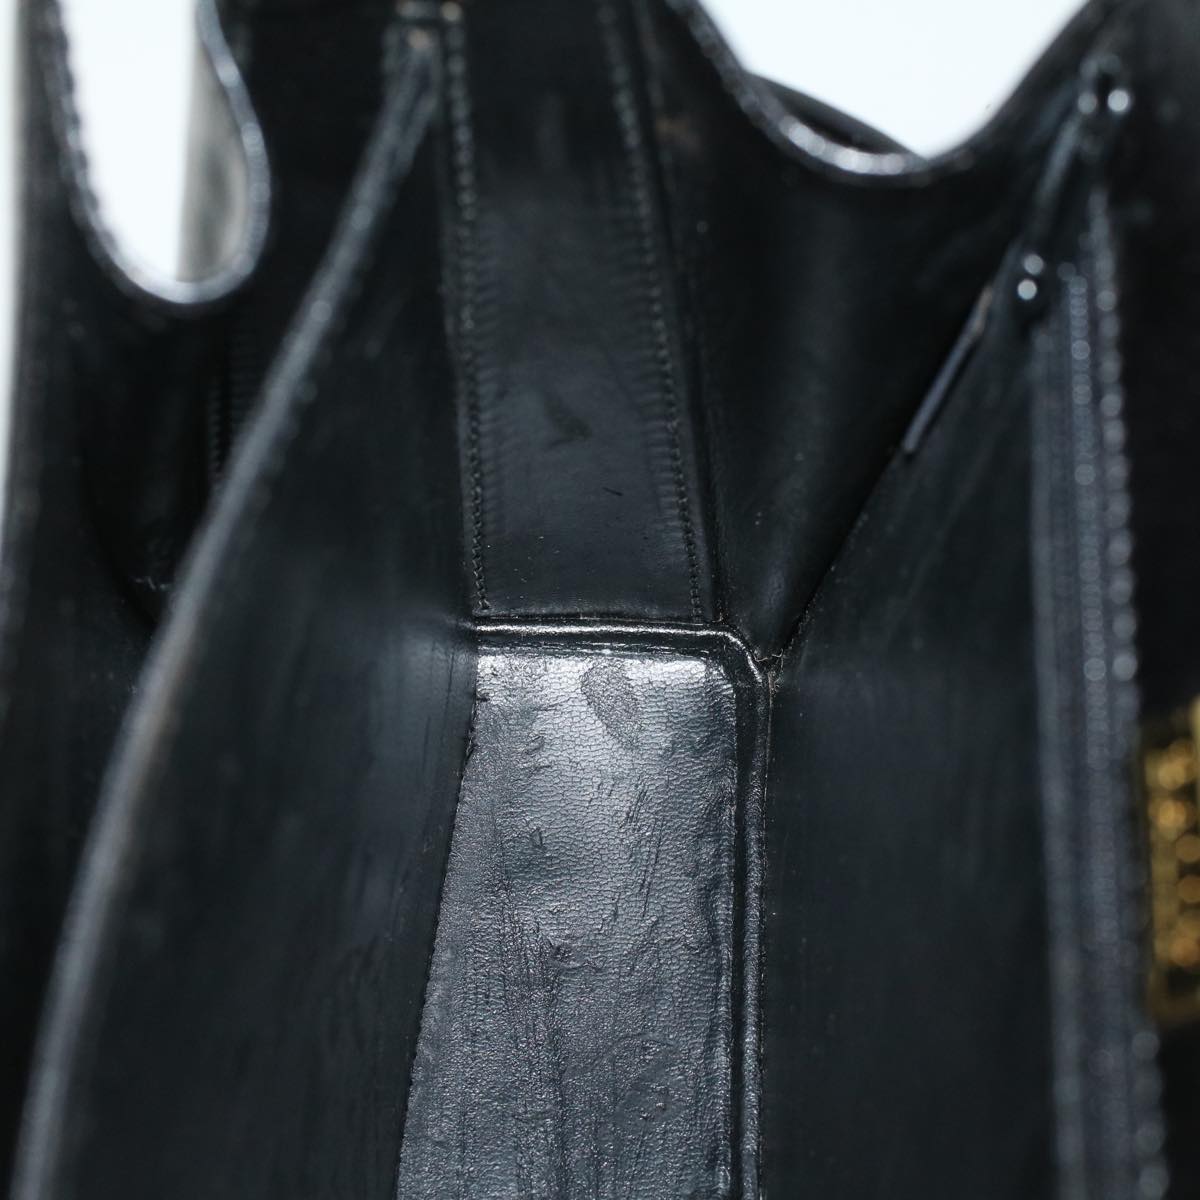 BALLY Hand Bag Leather Black Auth yk8682